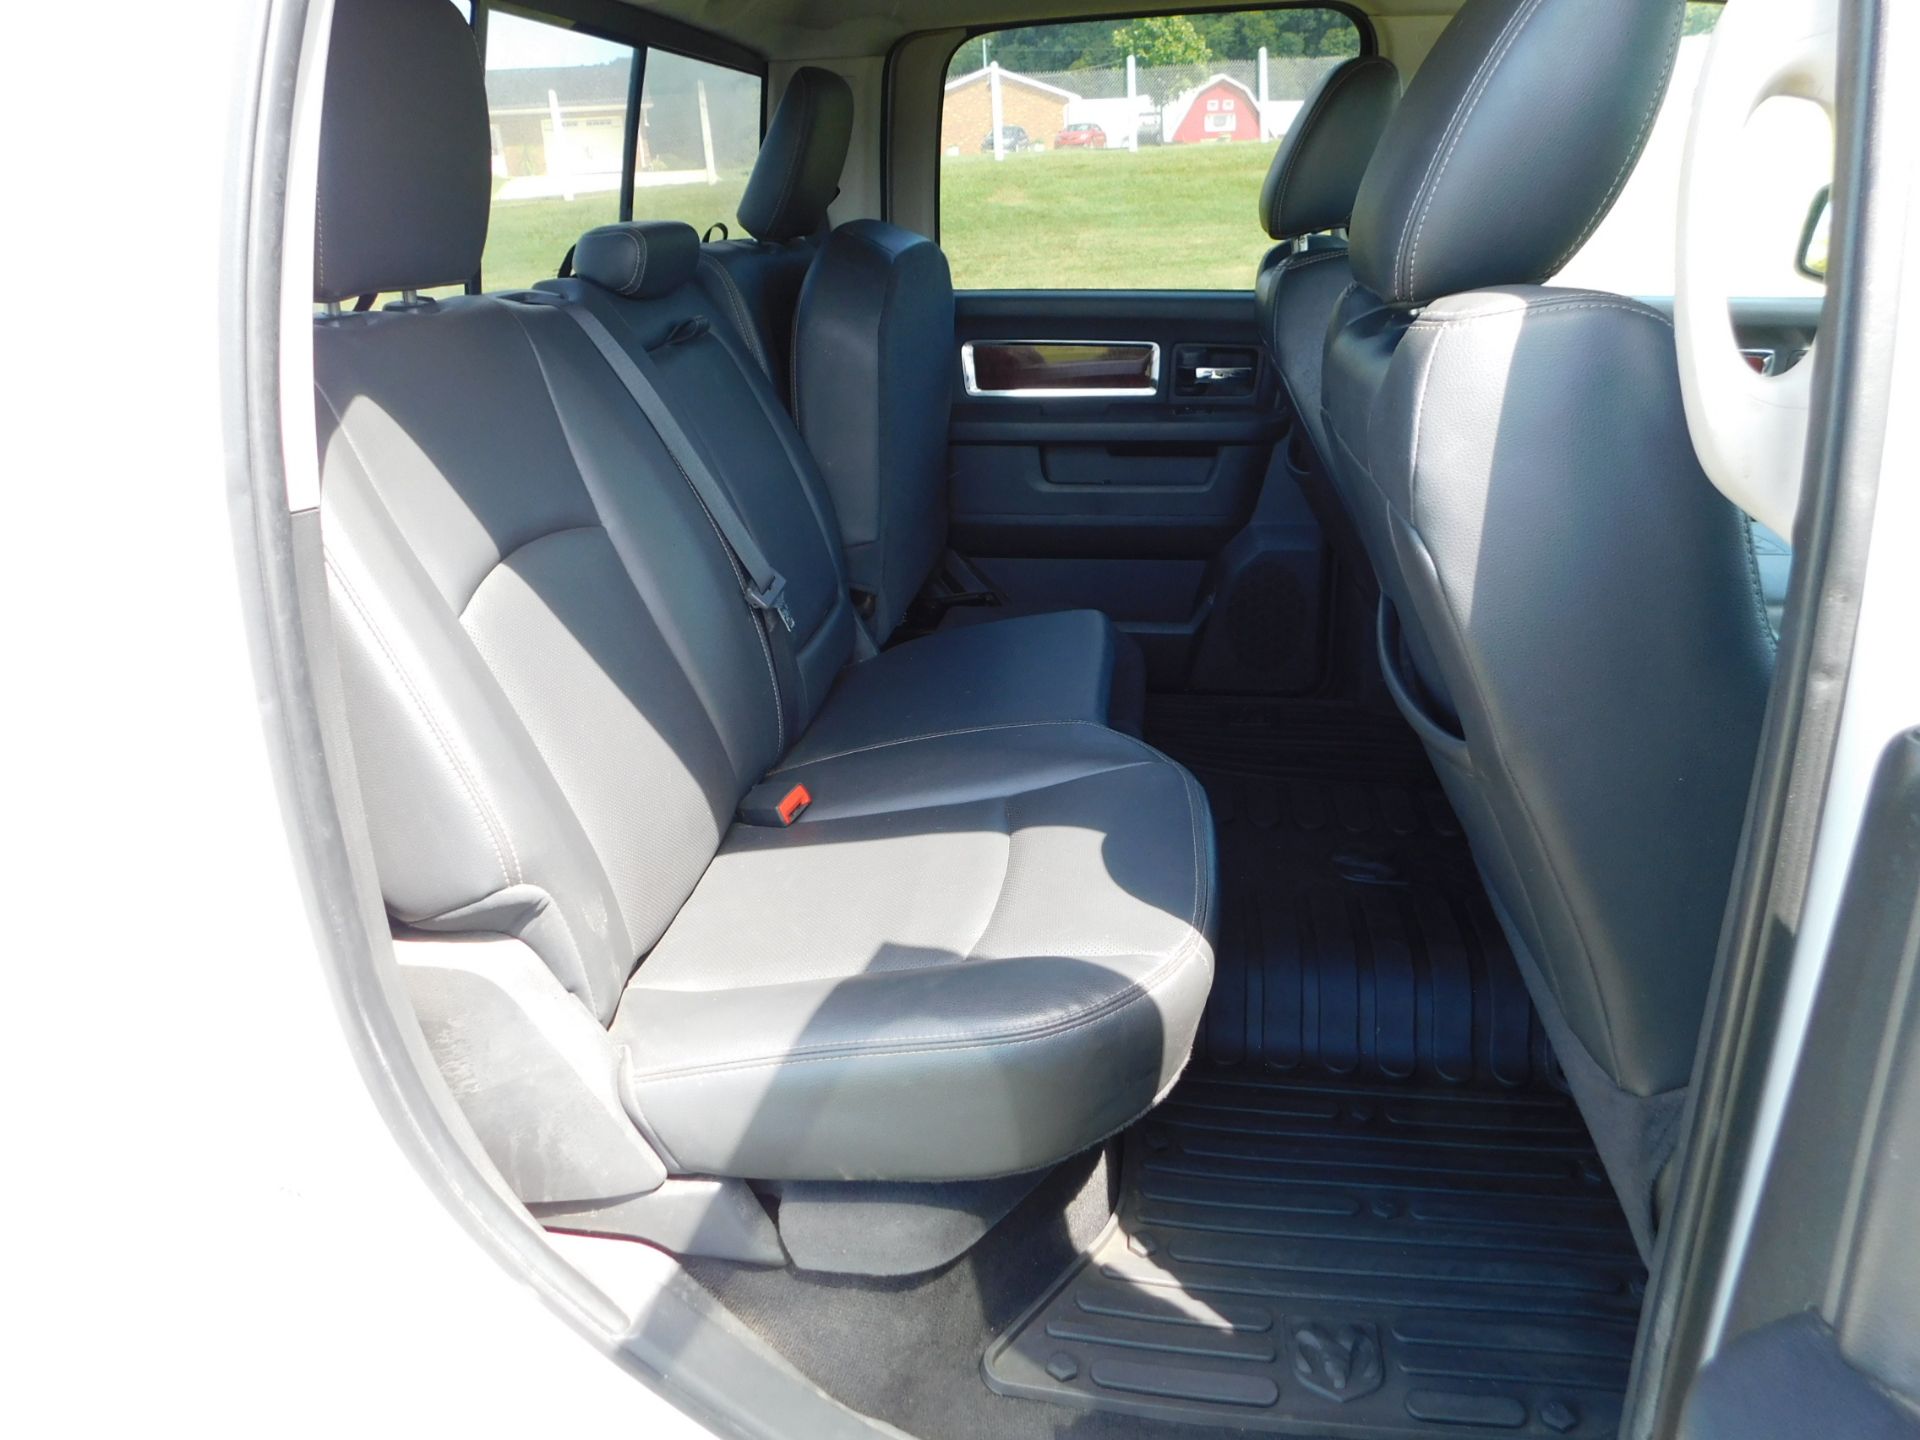 2012 Dodge Ram 1500 Pickup, Crew Cab, 6' Bed, Automatic, 4 WD, AM/FM,AC, PL, PW, Hemi 5.7 L - Image 46 of 53